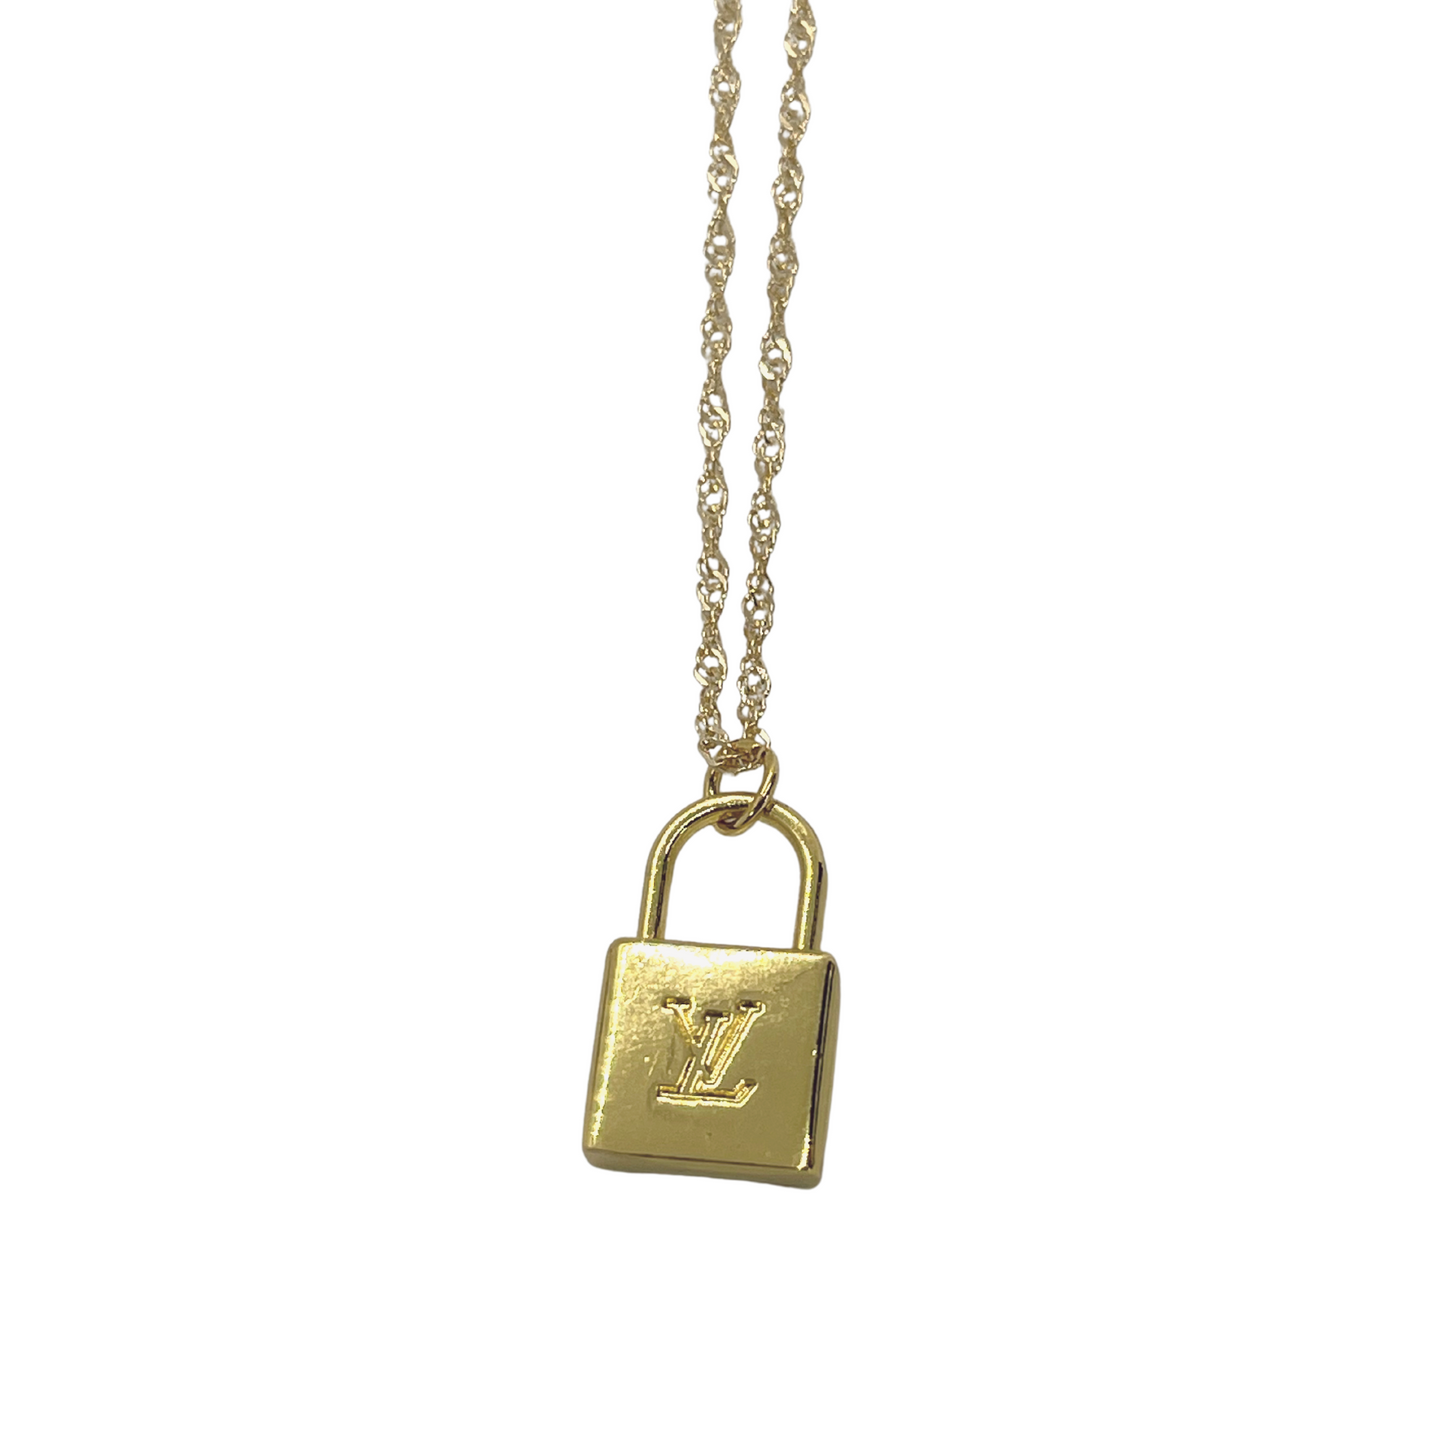 Authentic Louis Vuitton Heart Pendant | Reworked Gold 16.5 Necklace